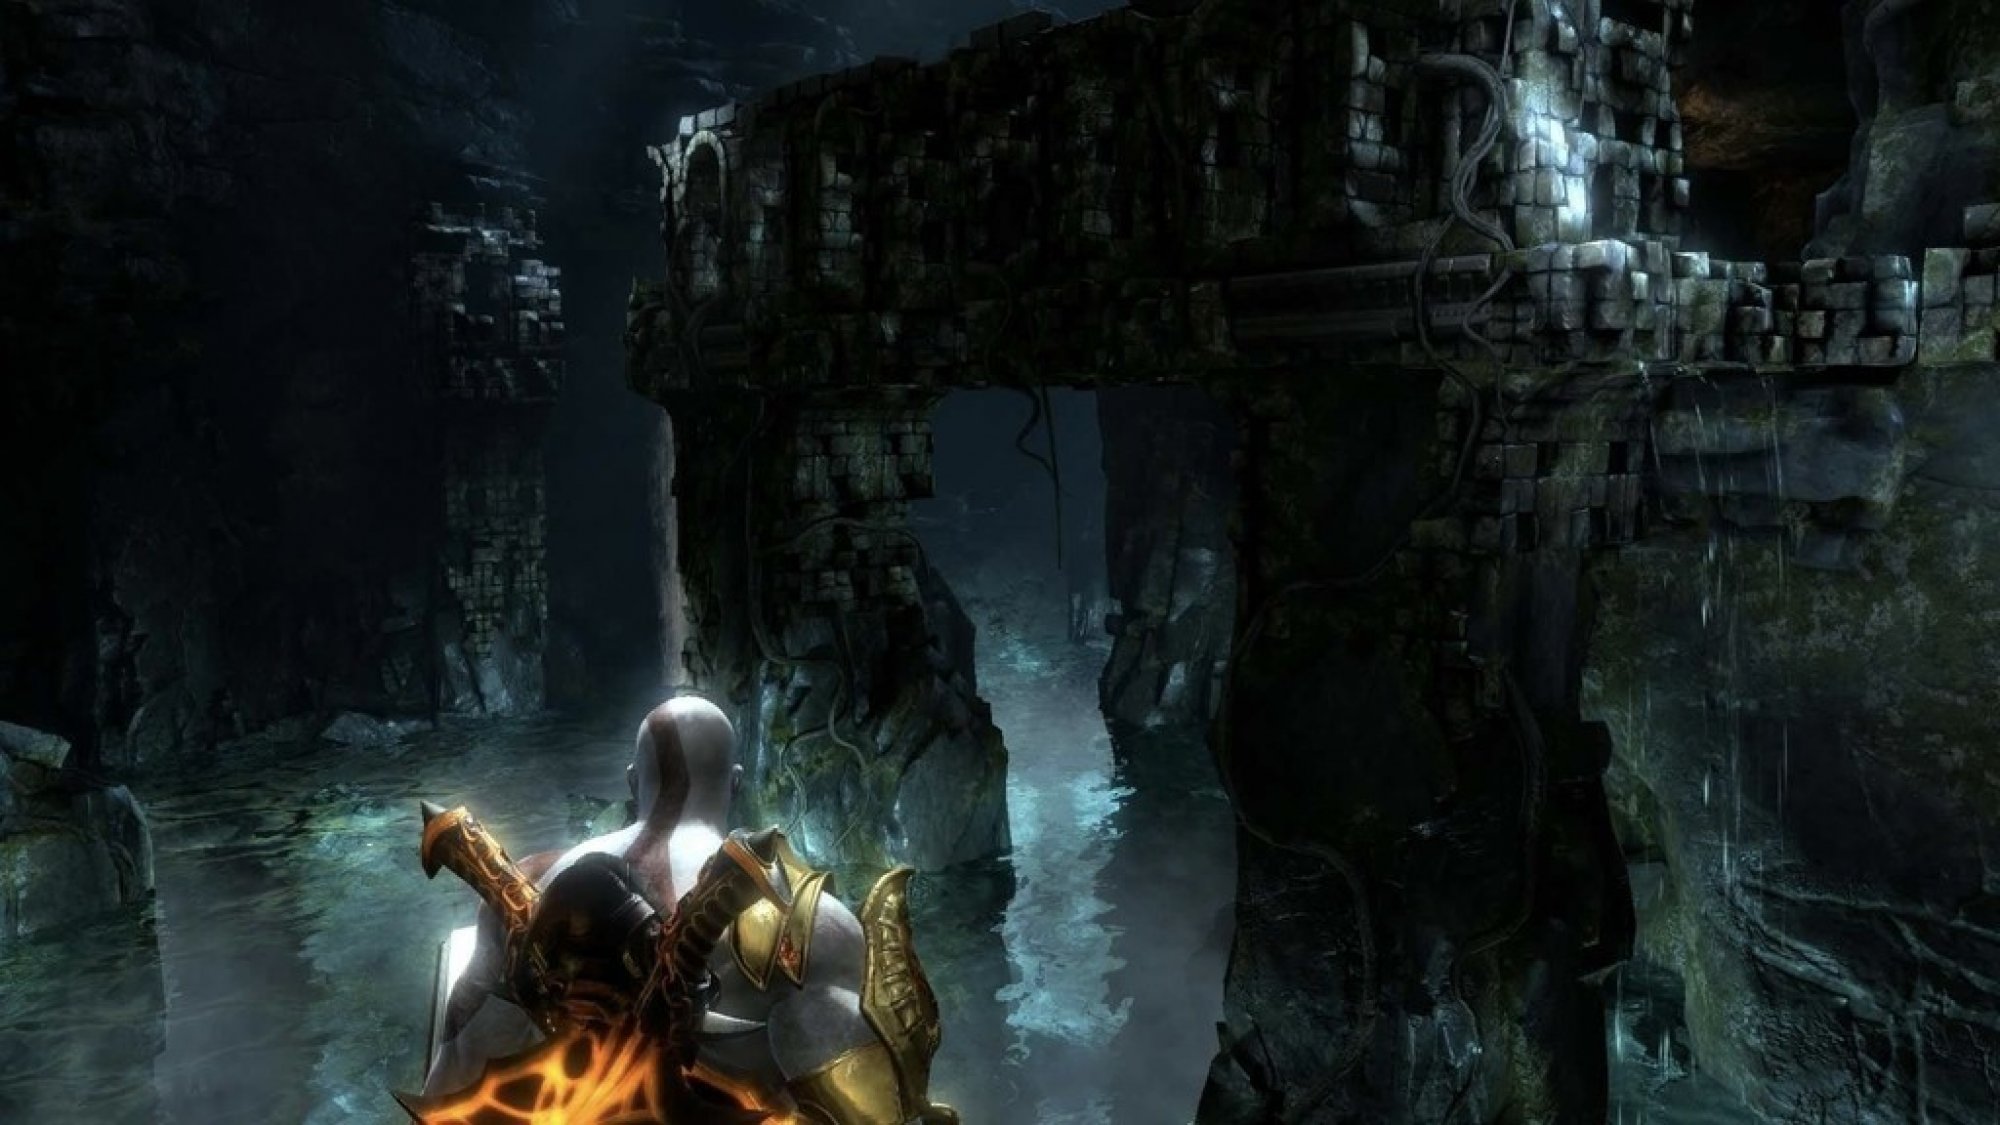 Obrázek PS4 - HITS God of War 3 Remastered